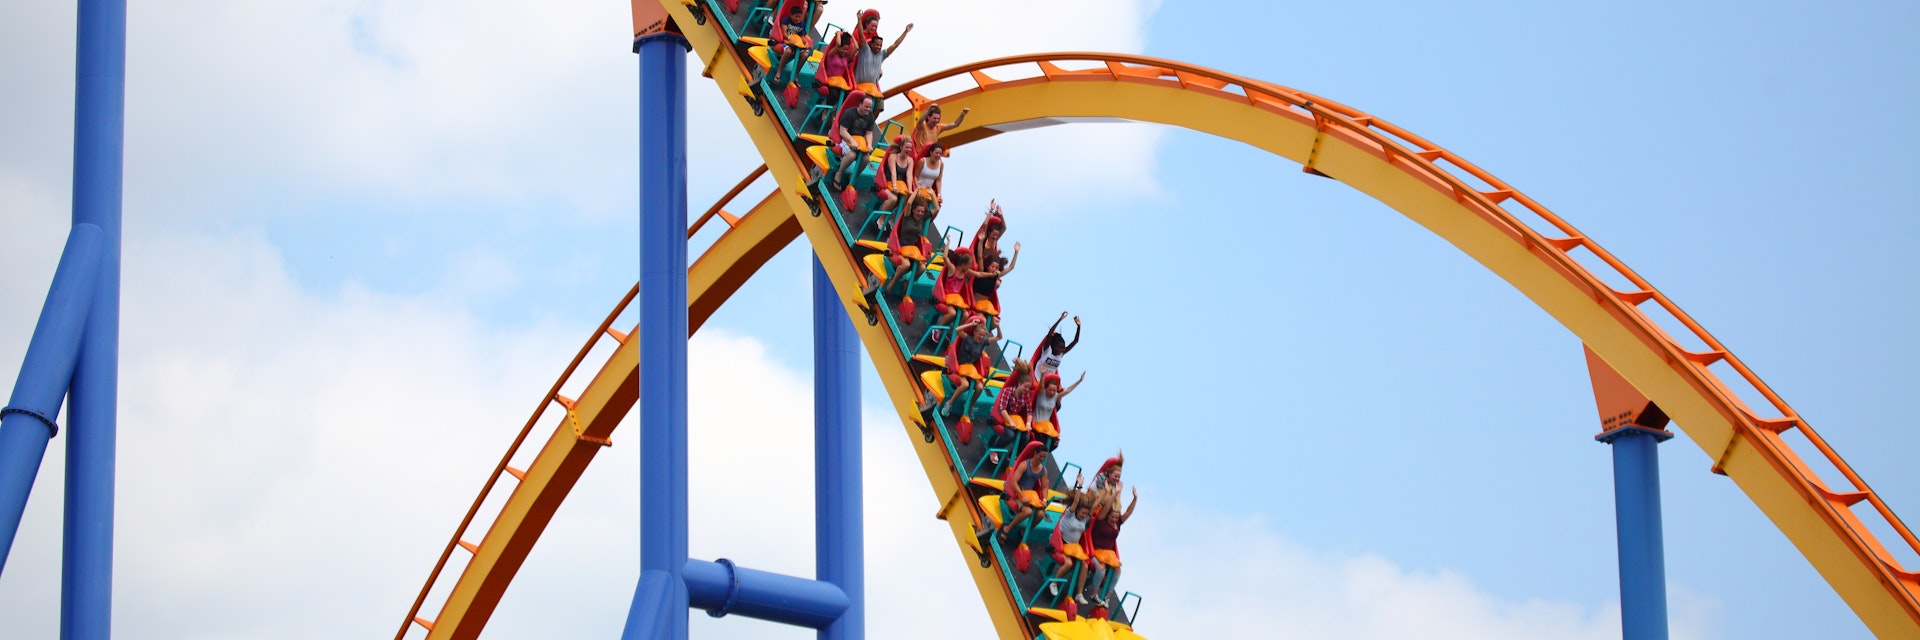 July 11, 2015: People riding the Behemoth Roller Coaster at Canada's Wonderland amusement park.